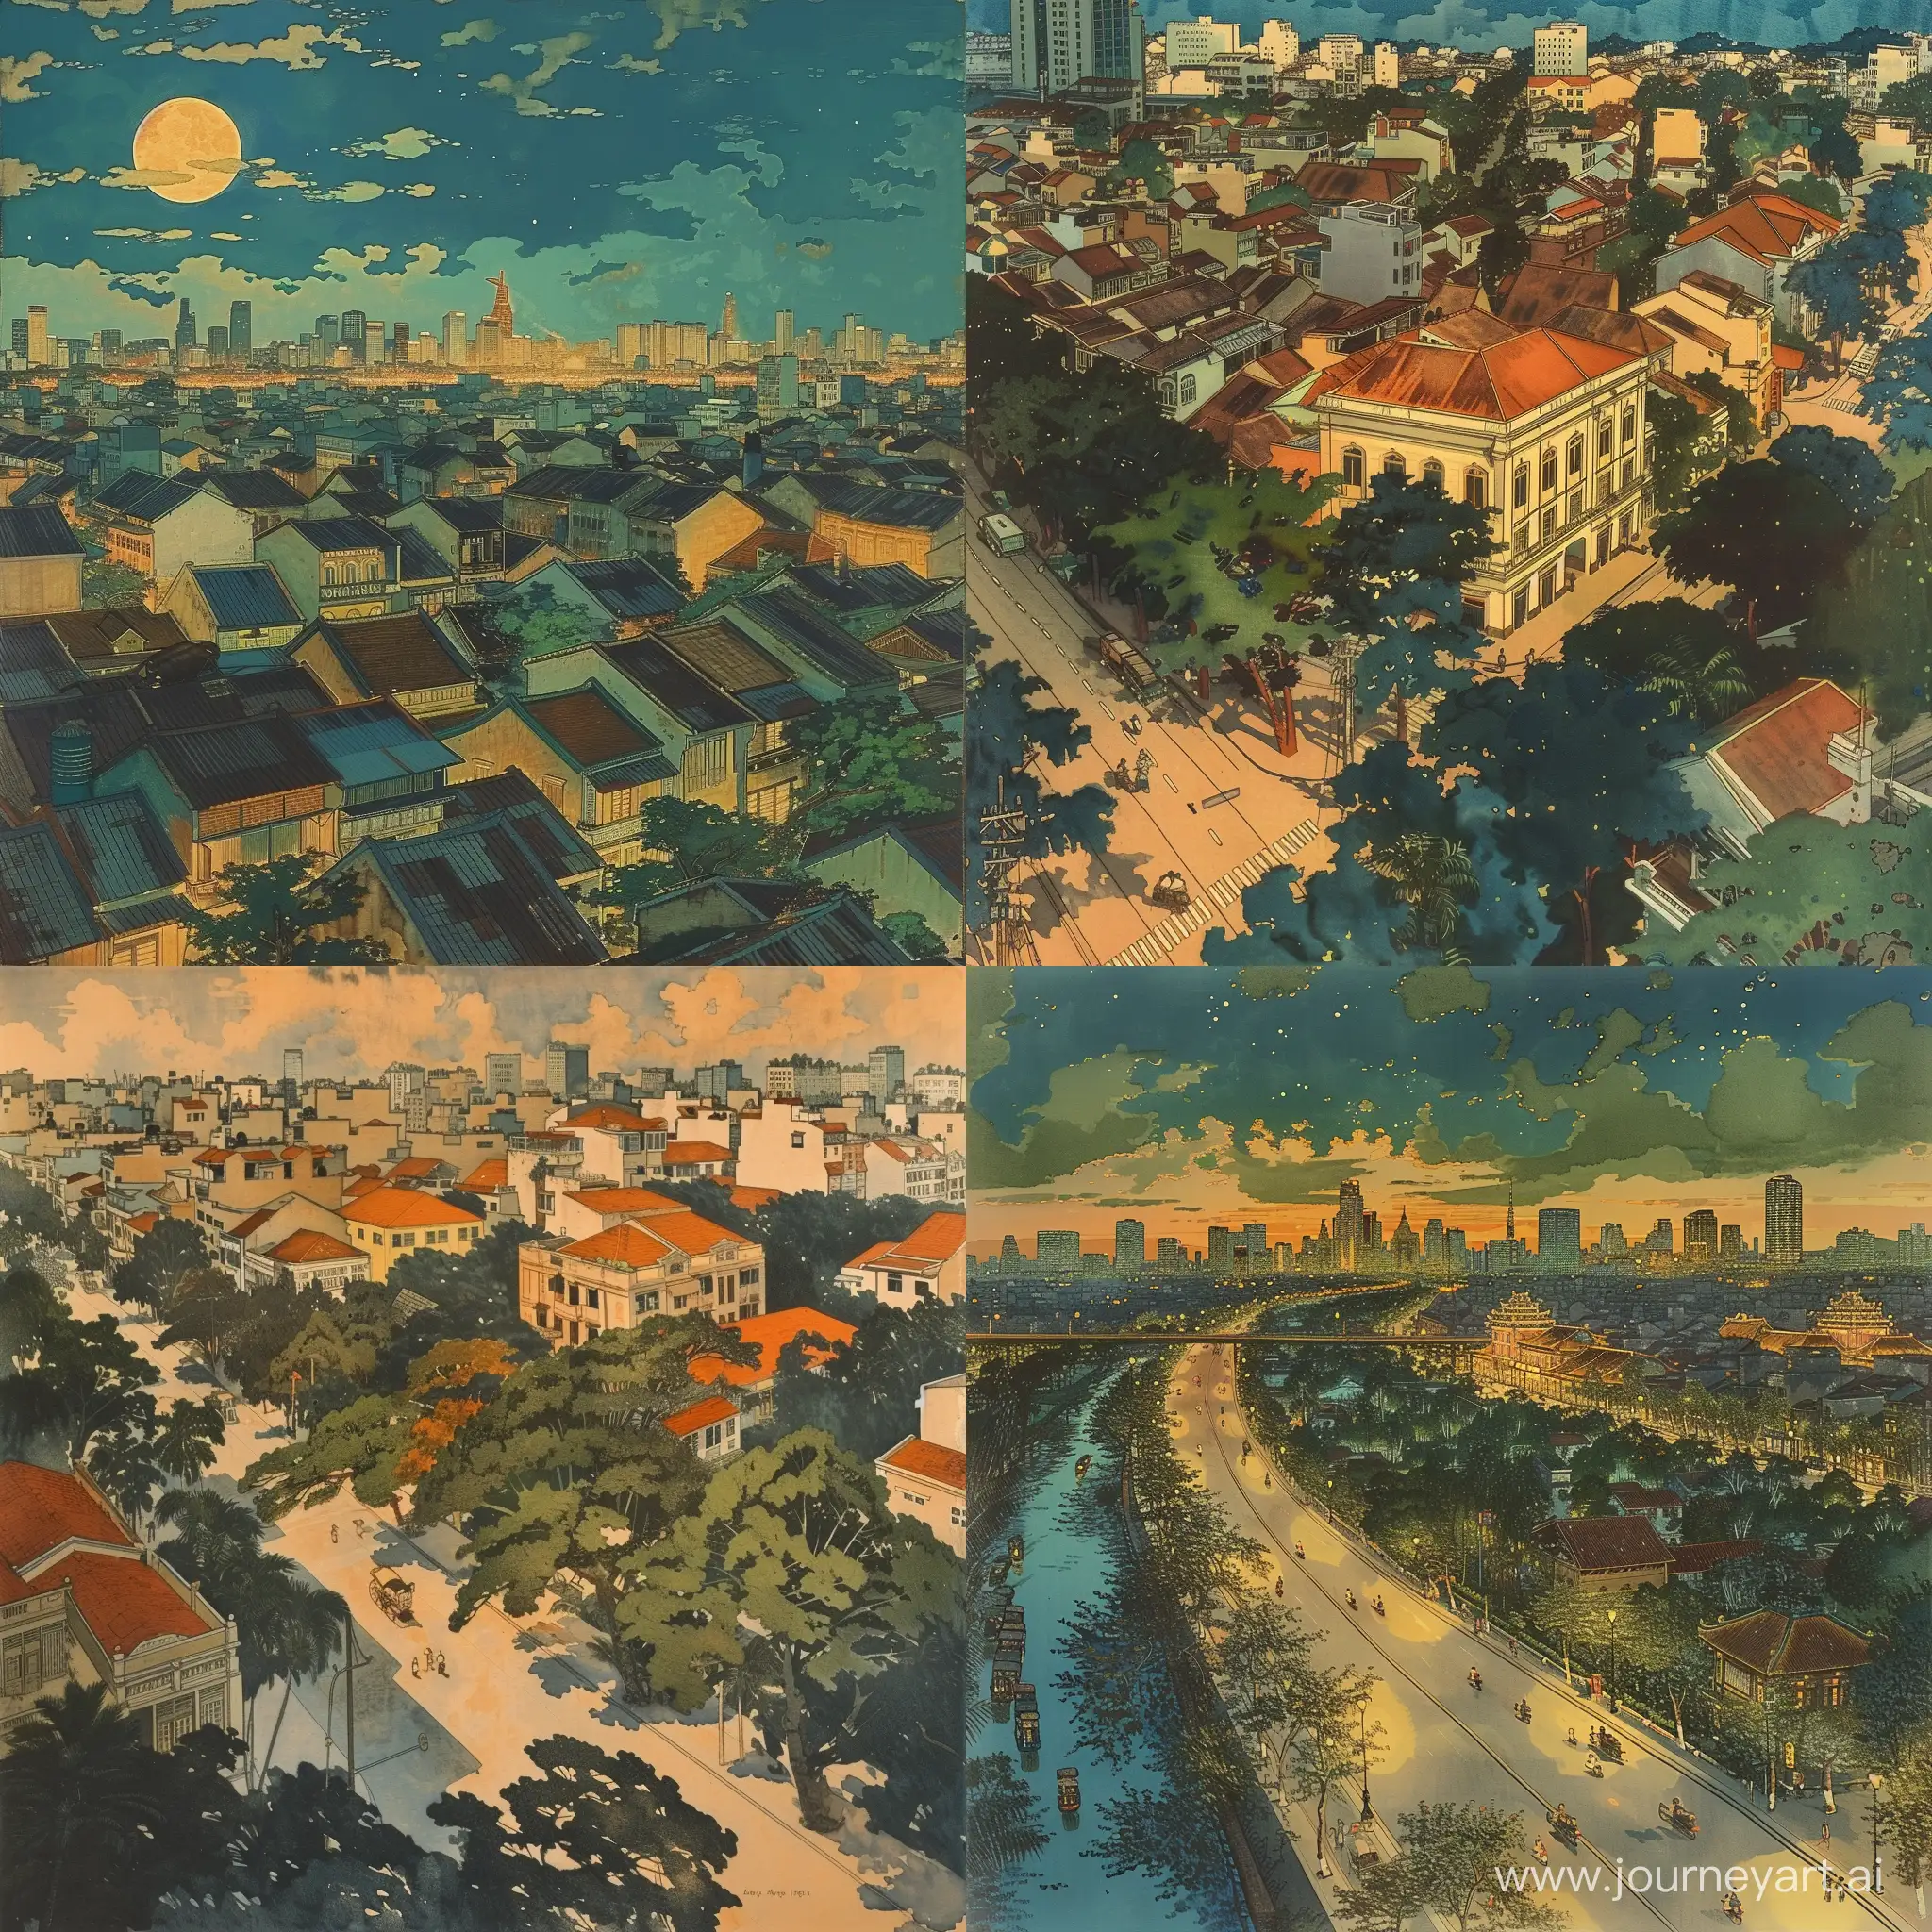 a painting of ho chi minh city vietnam, a art by Kawase Hasui, pixiv, shin hanga, ukiyo-e, Kawase Hasui in shin-hanga style art, creative commons attribution